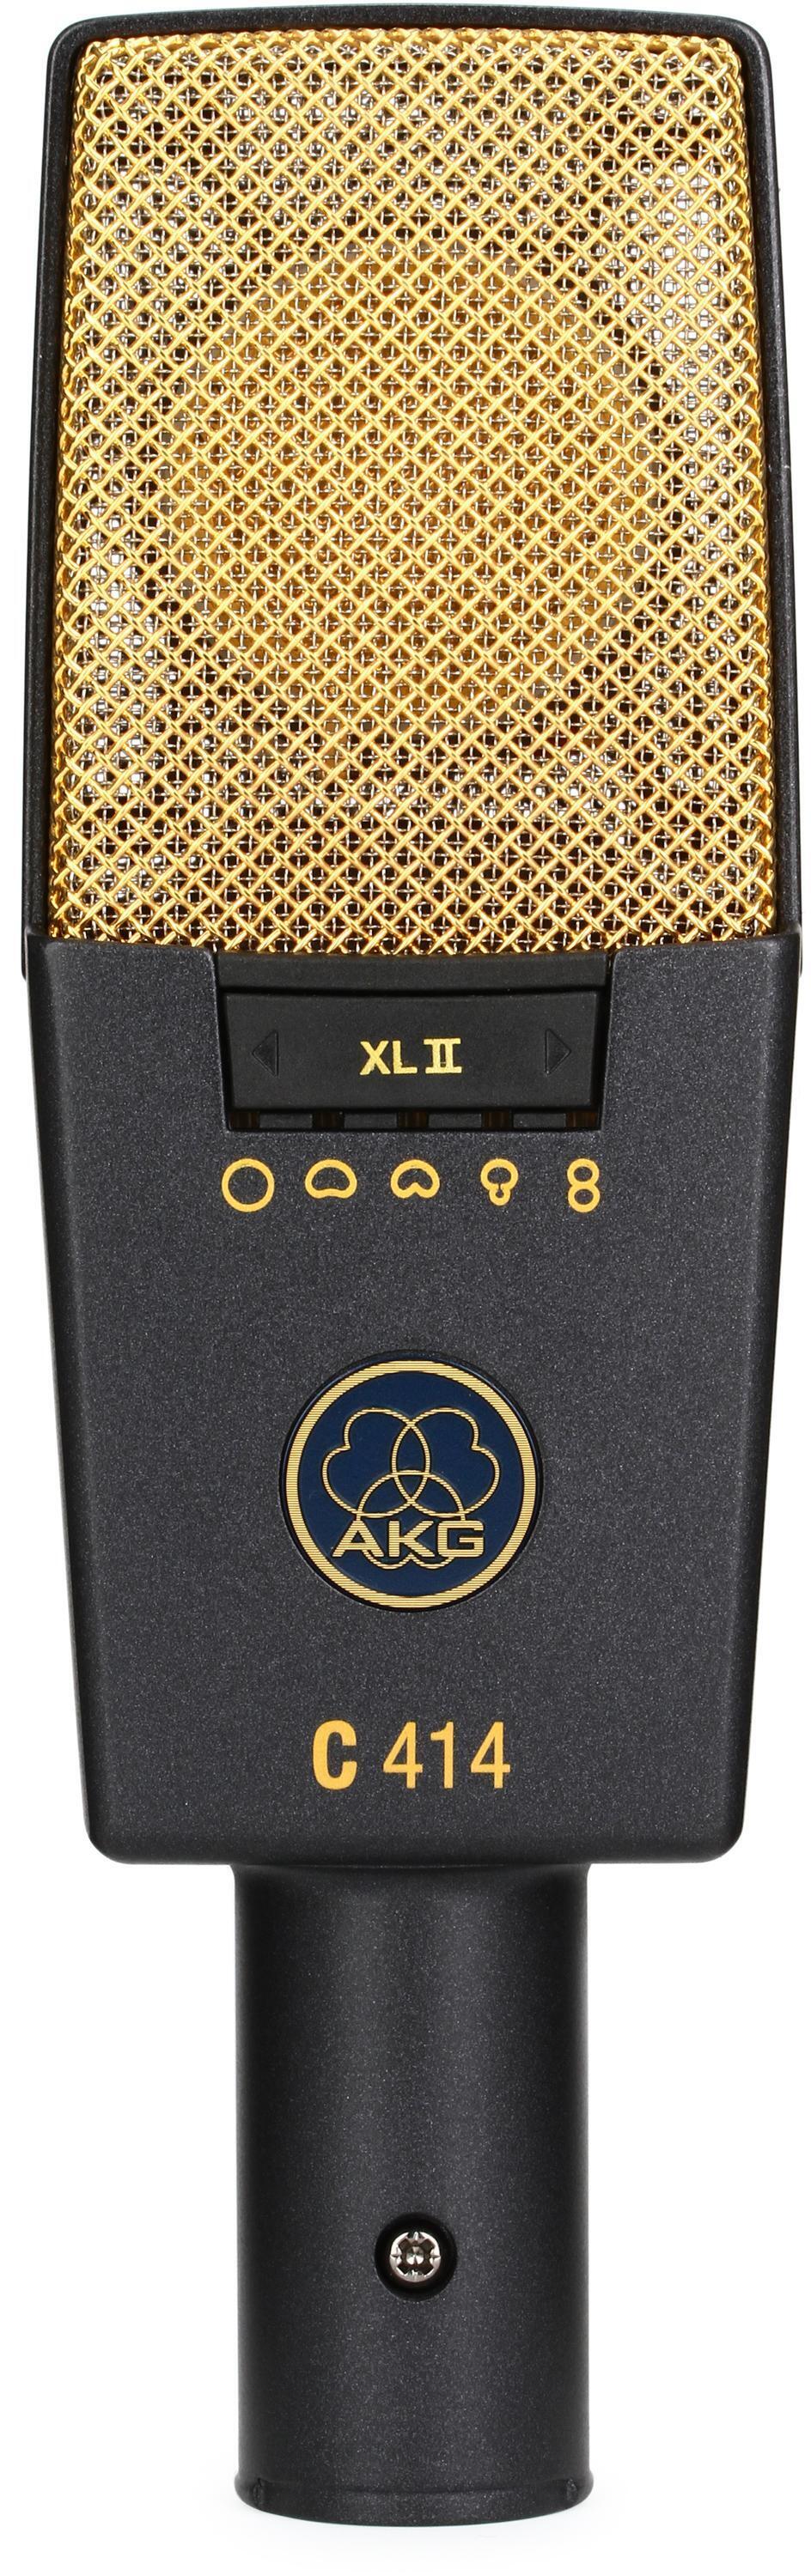 Bundled Item: AKG C414 XLII Large-diaphragm Condenser Microphone